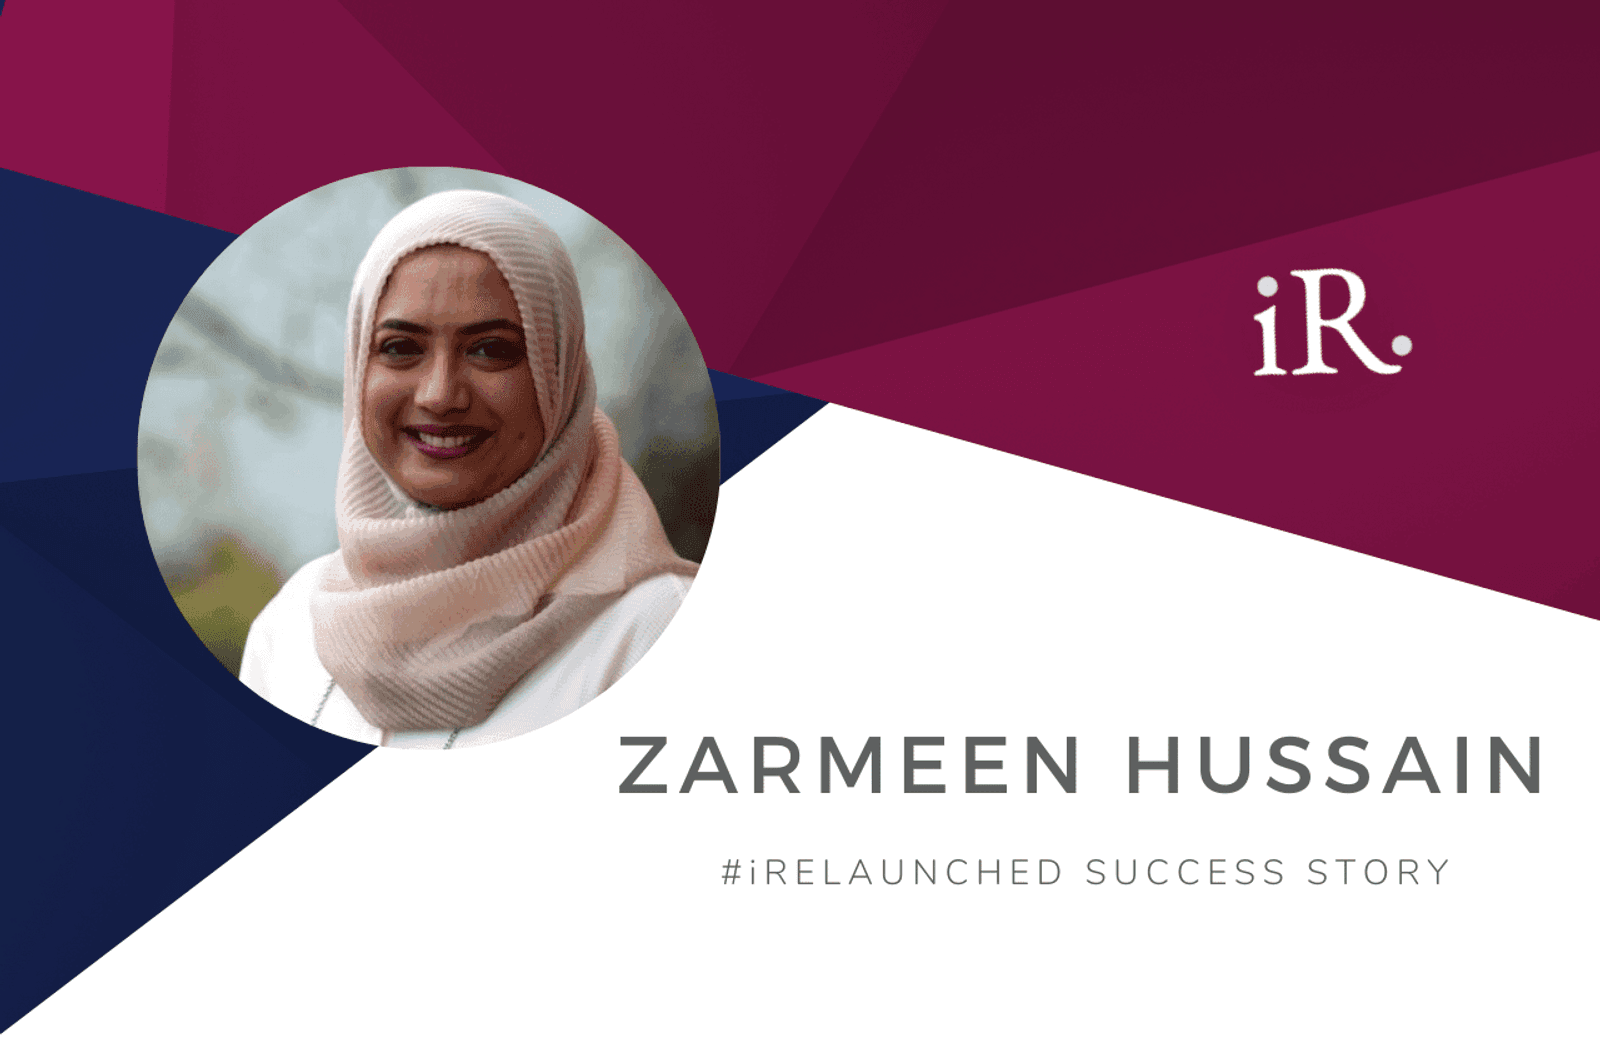 Zarmeen hussain success story thumbnail